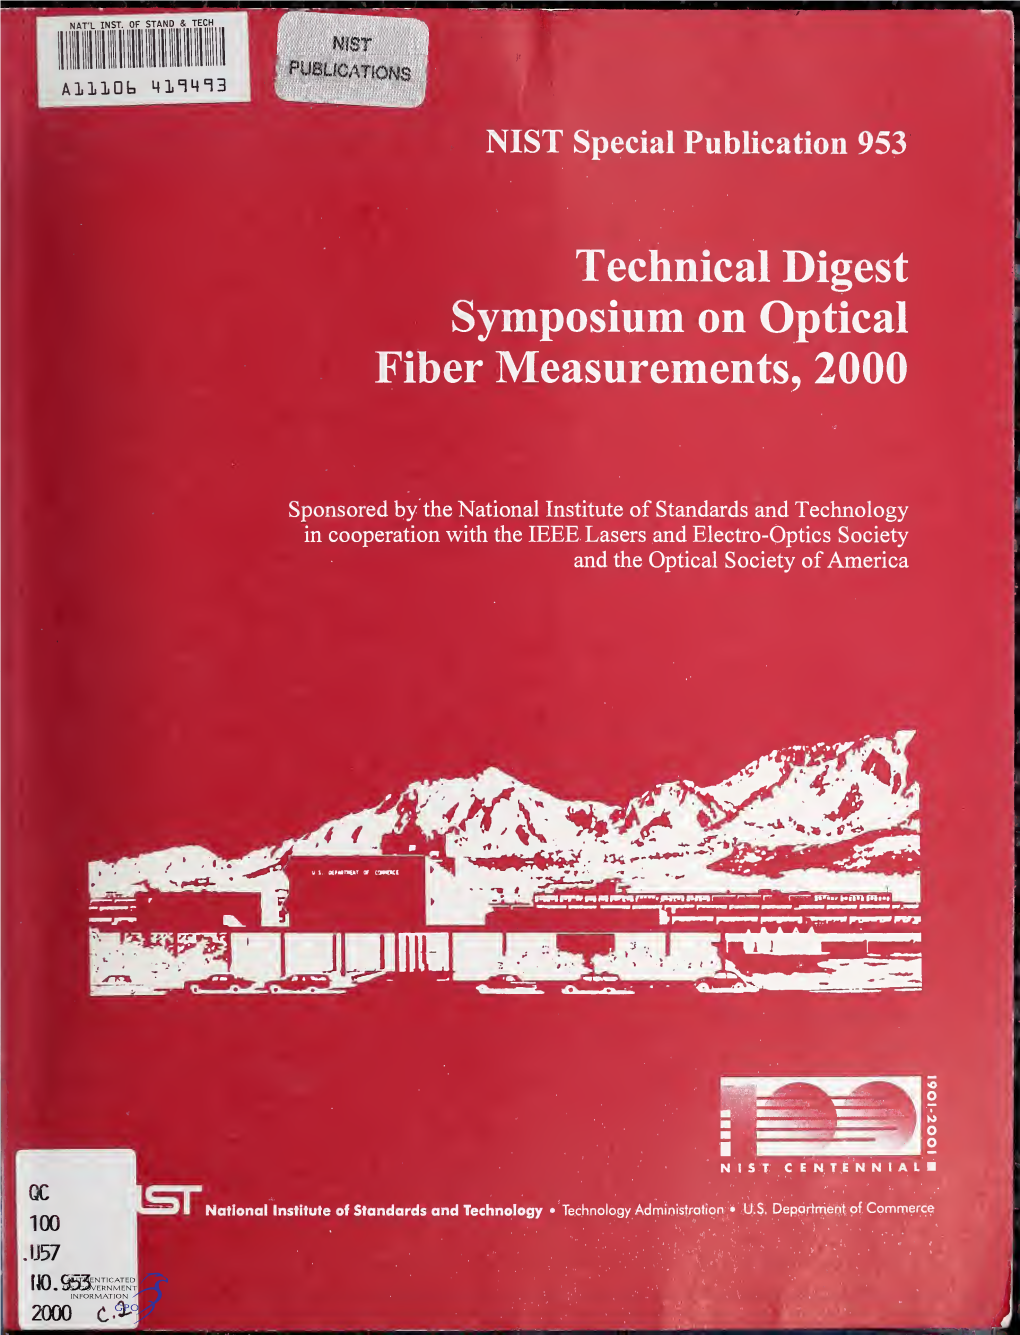 Symposium on Optical Fiber Measurements, 2000